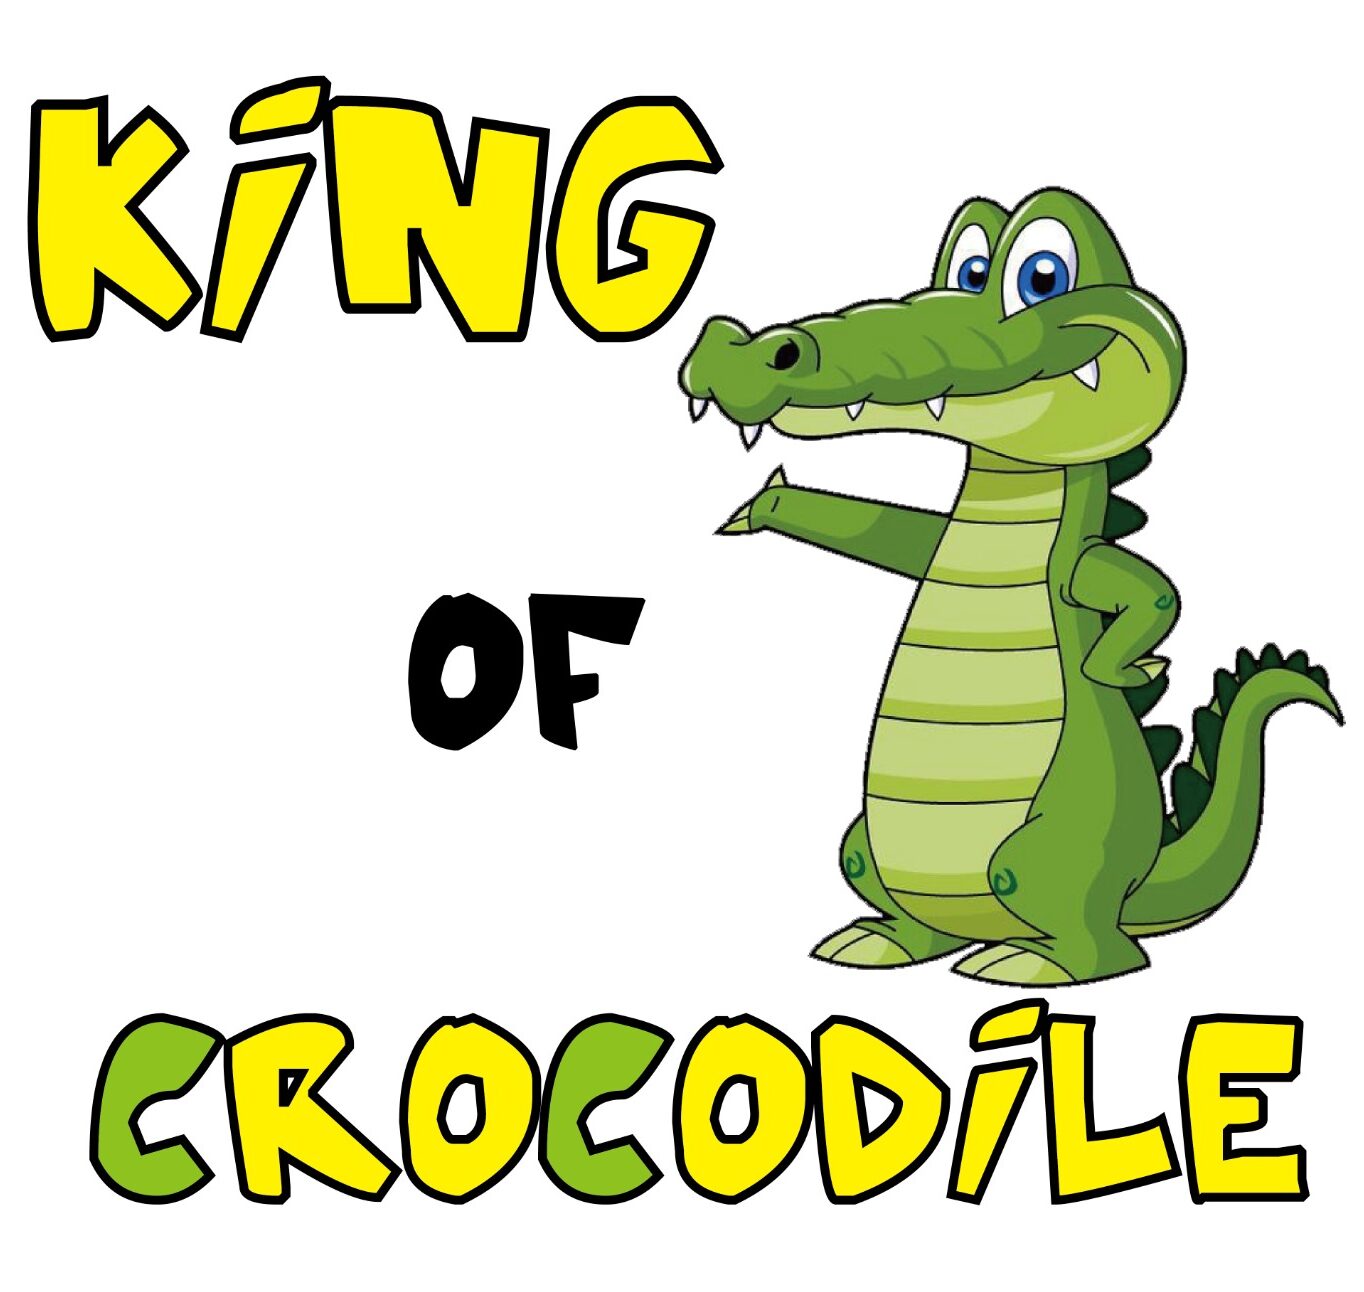 King of Crocodile